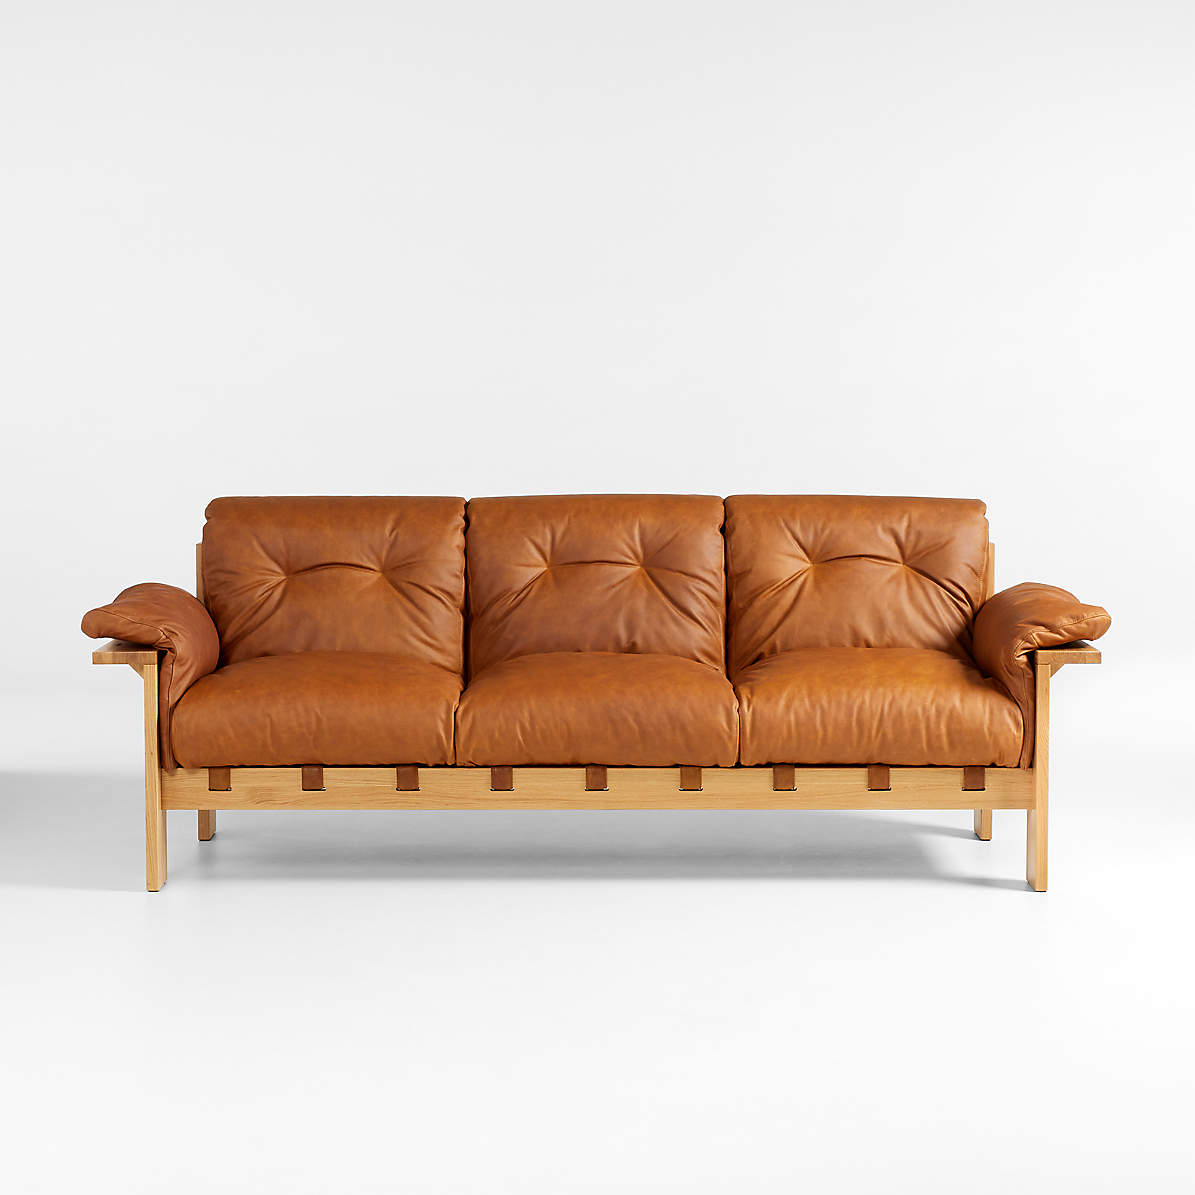 Shinola Runwell Wood Frame Leather Sofa, Wood Frame Sofa With Leather Cushions